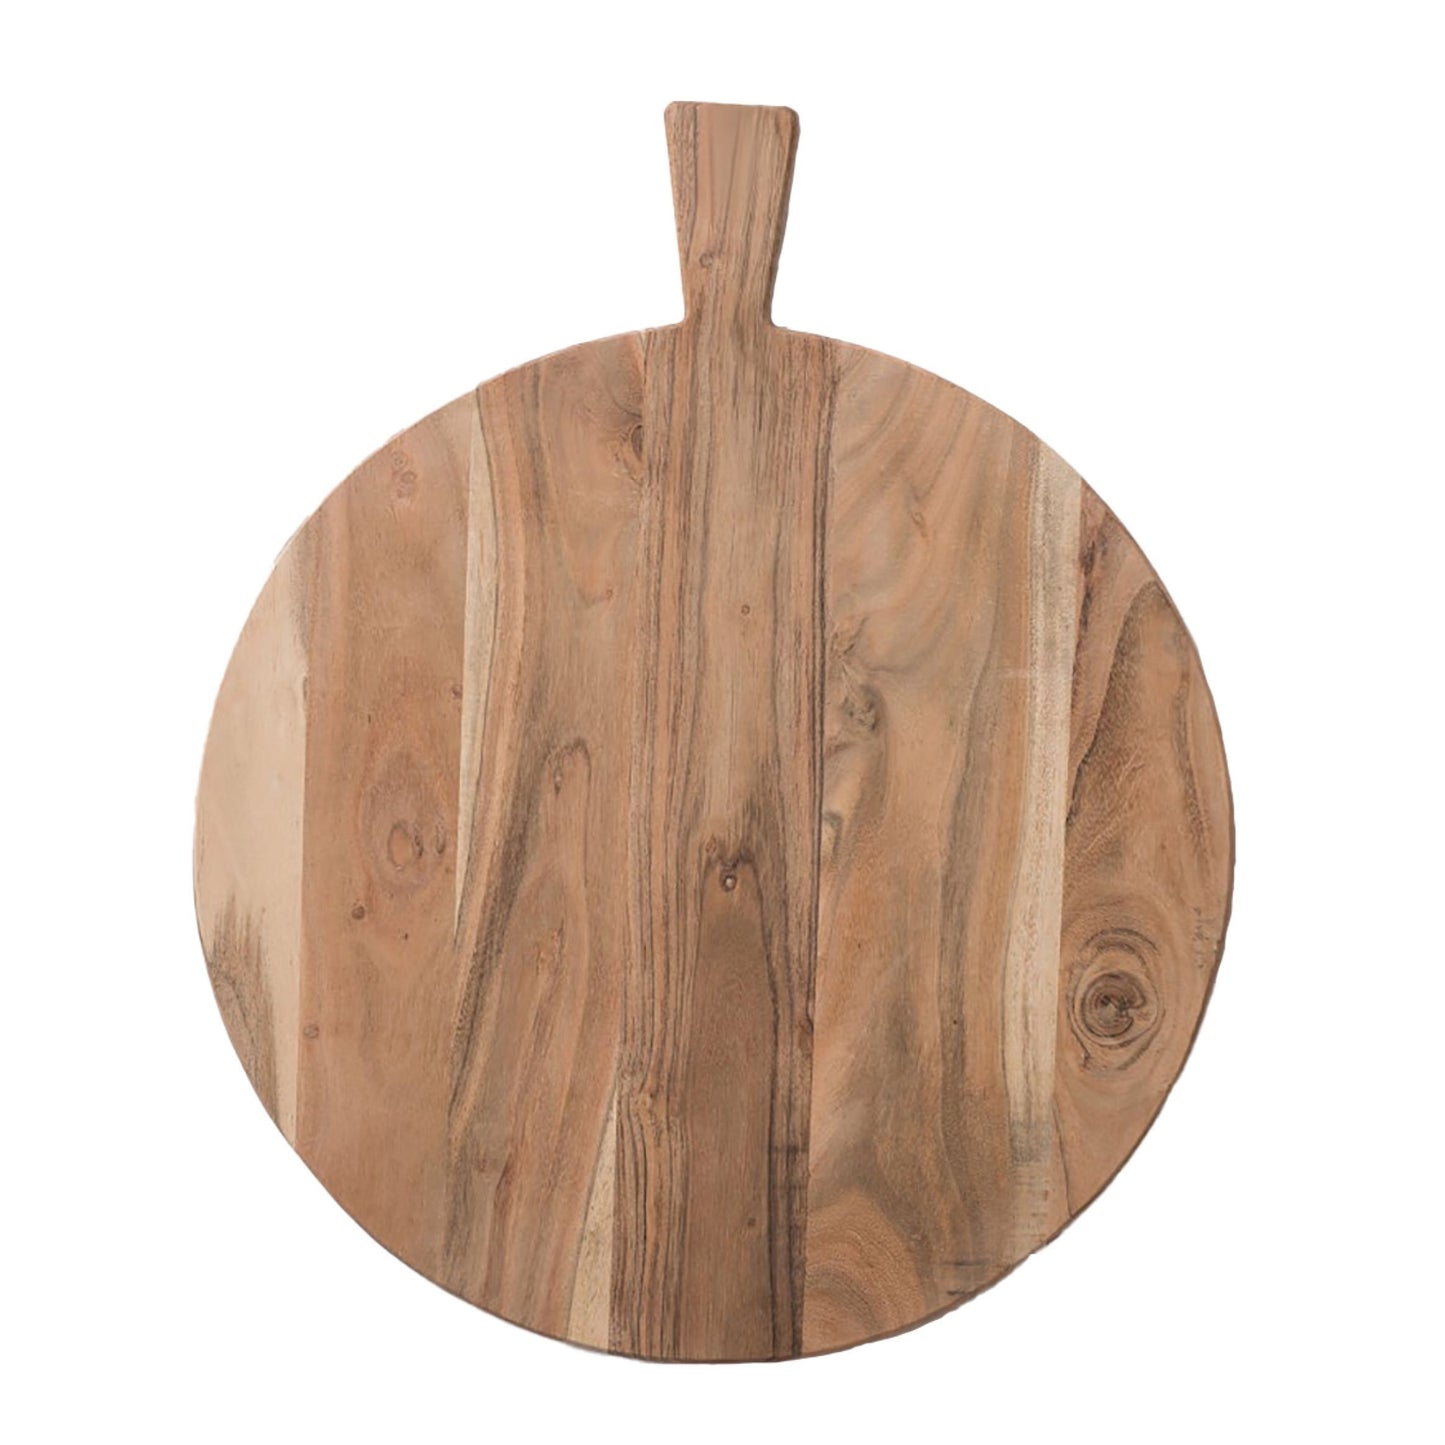 Round wooden serving board